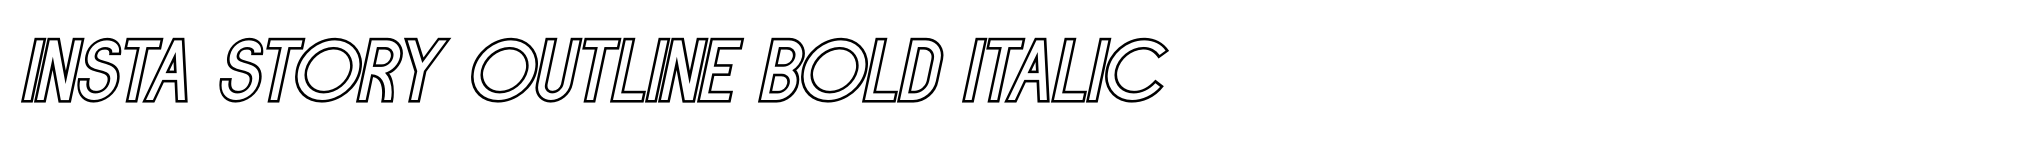 Insta Story Outline Bold Italic image